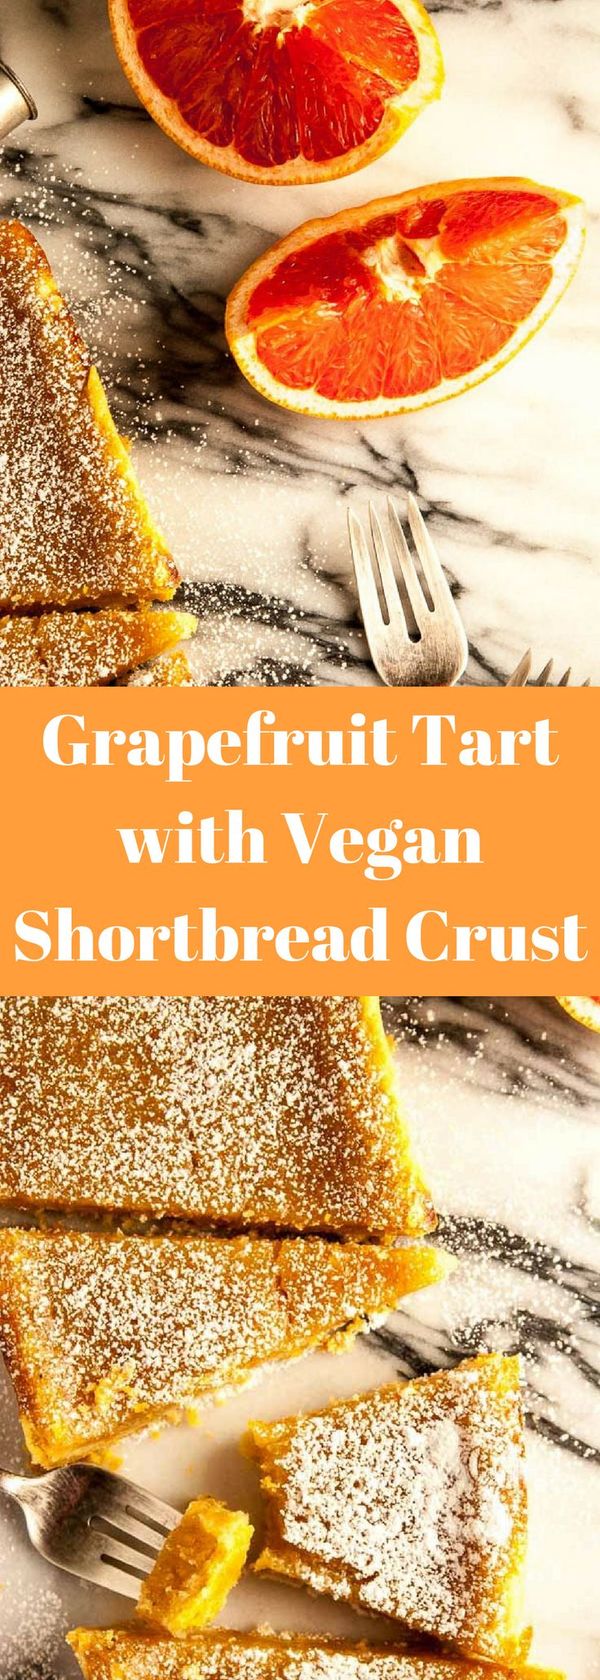 Grapefruit Tart with Shortbread Crust